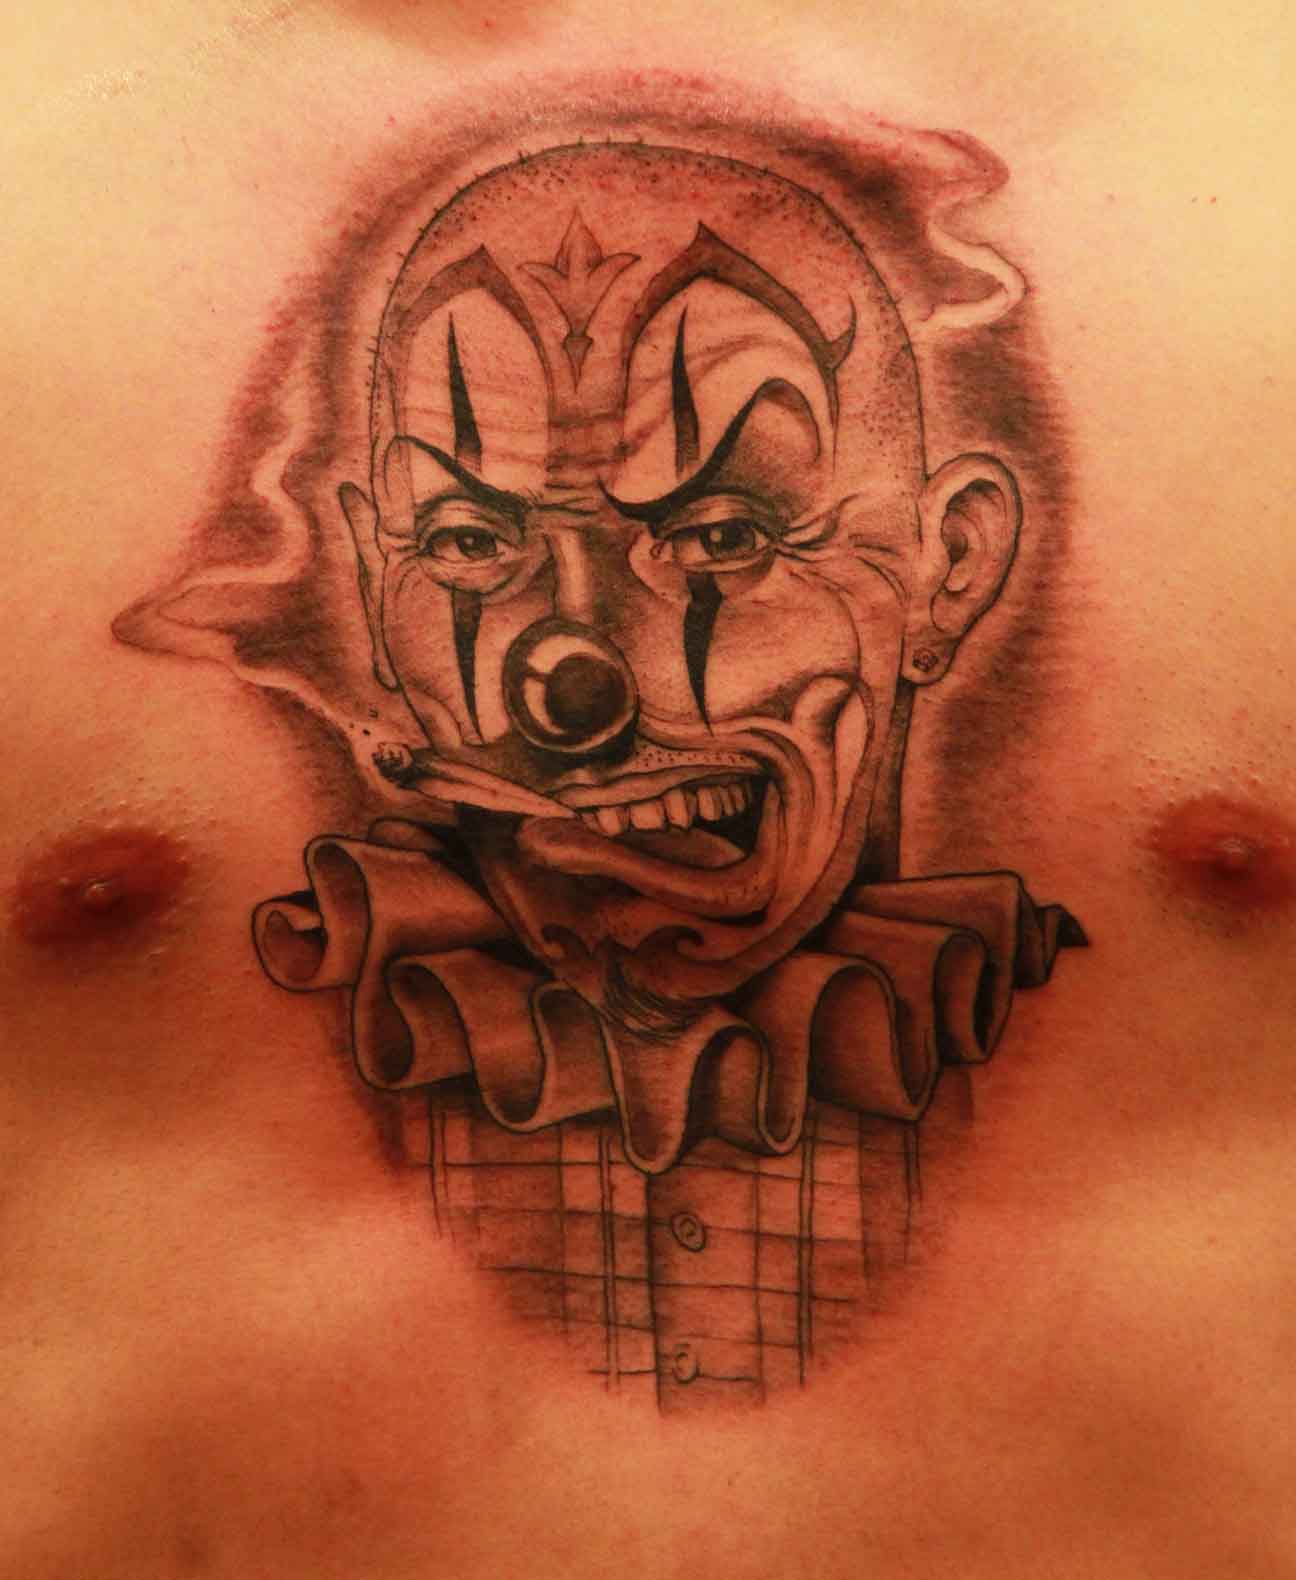 16 Sheets Joker Tattoos, Harley Quinn Tattoos, Tattoos for Suicide Squad  Perfect | eBay